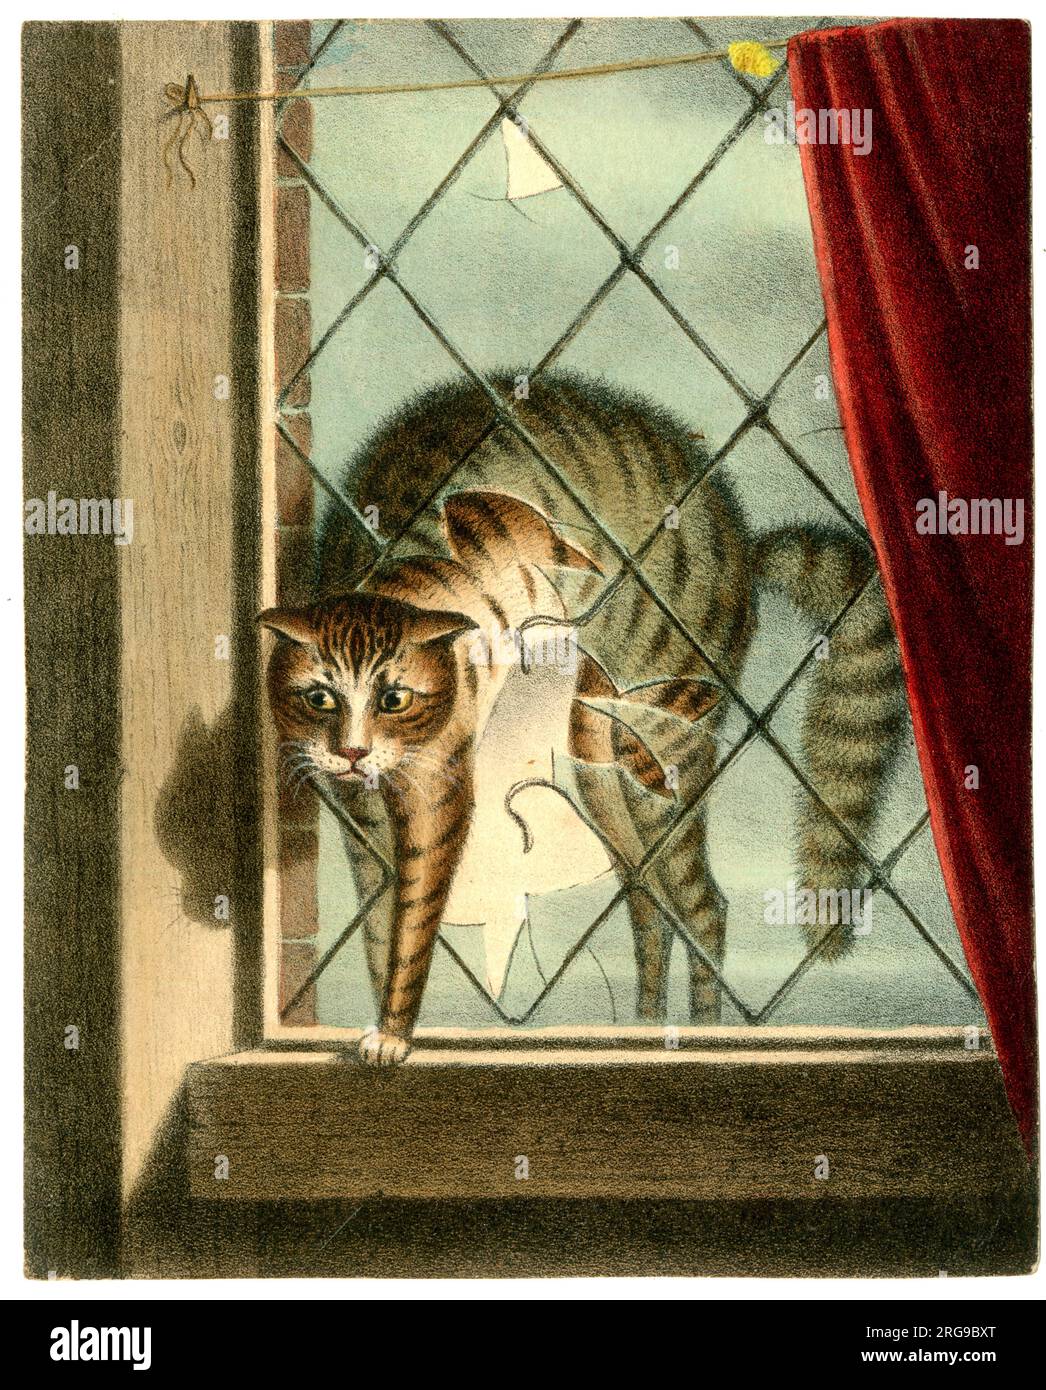 Cat climbing through Broken Window - mid 19th century colour print Stock Photo